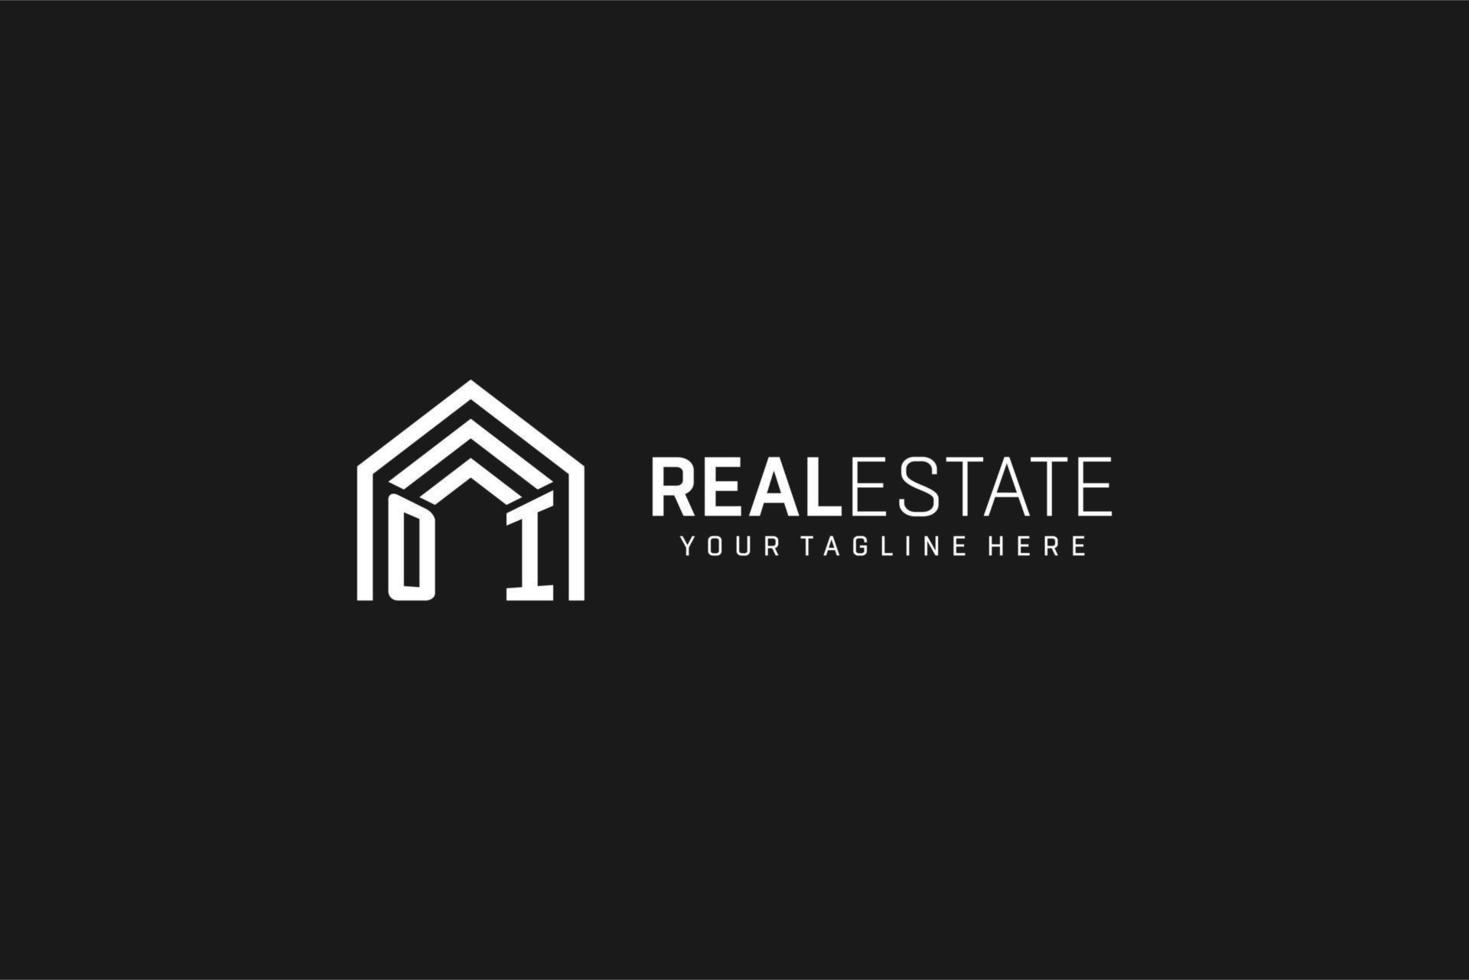 Letter OI house roof shape logo, creative real estate monogram logo style vector